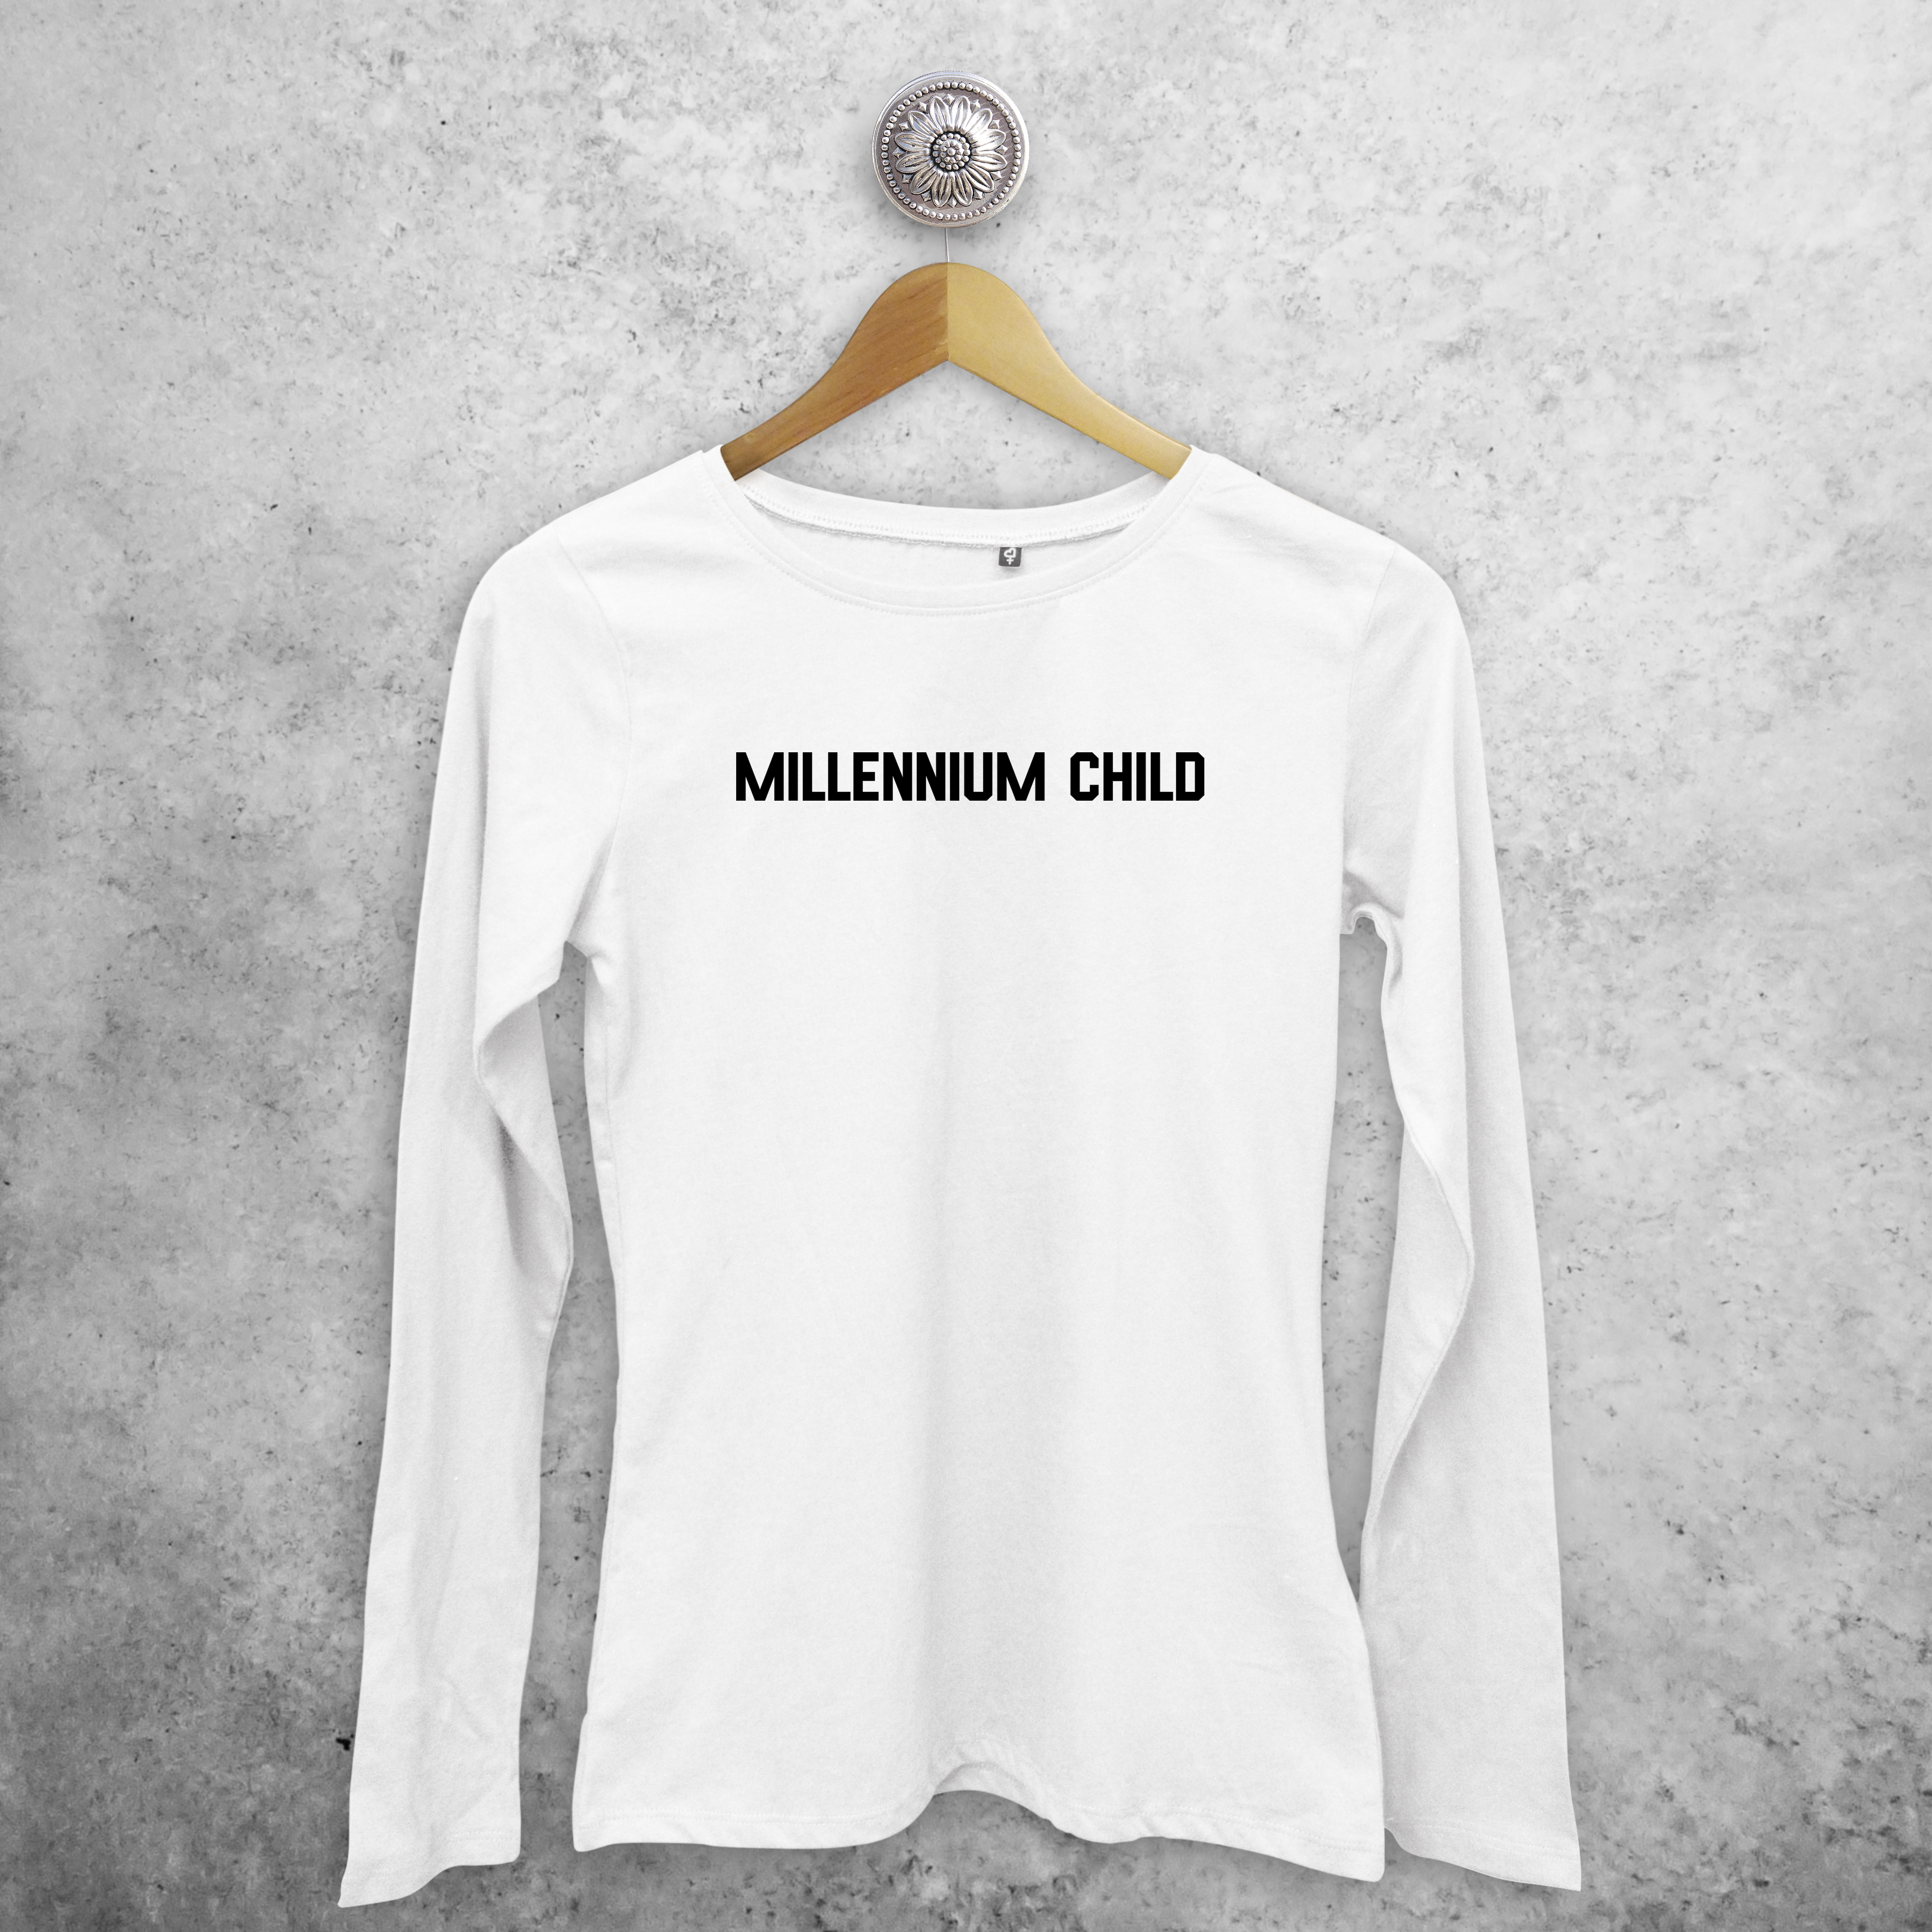 'Millennium child' adult longsleeve shirt